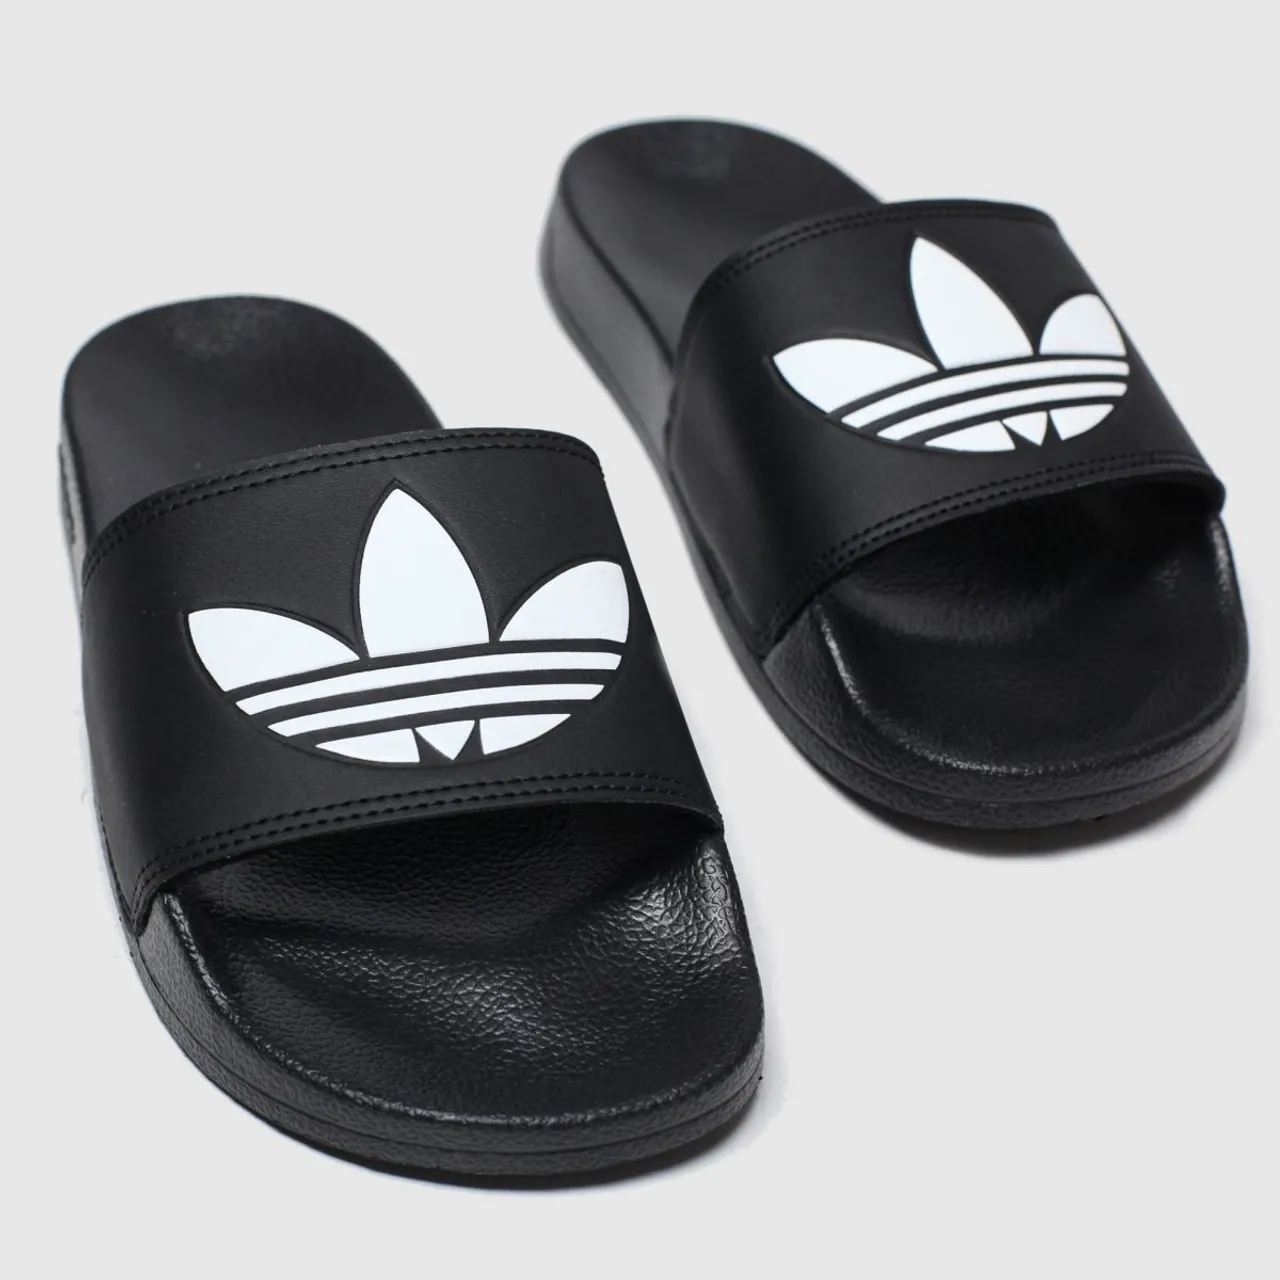 Adidas Ladies Black and White Adilette Lite Sandals